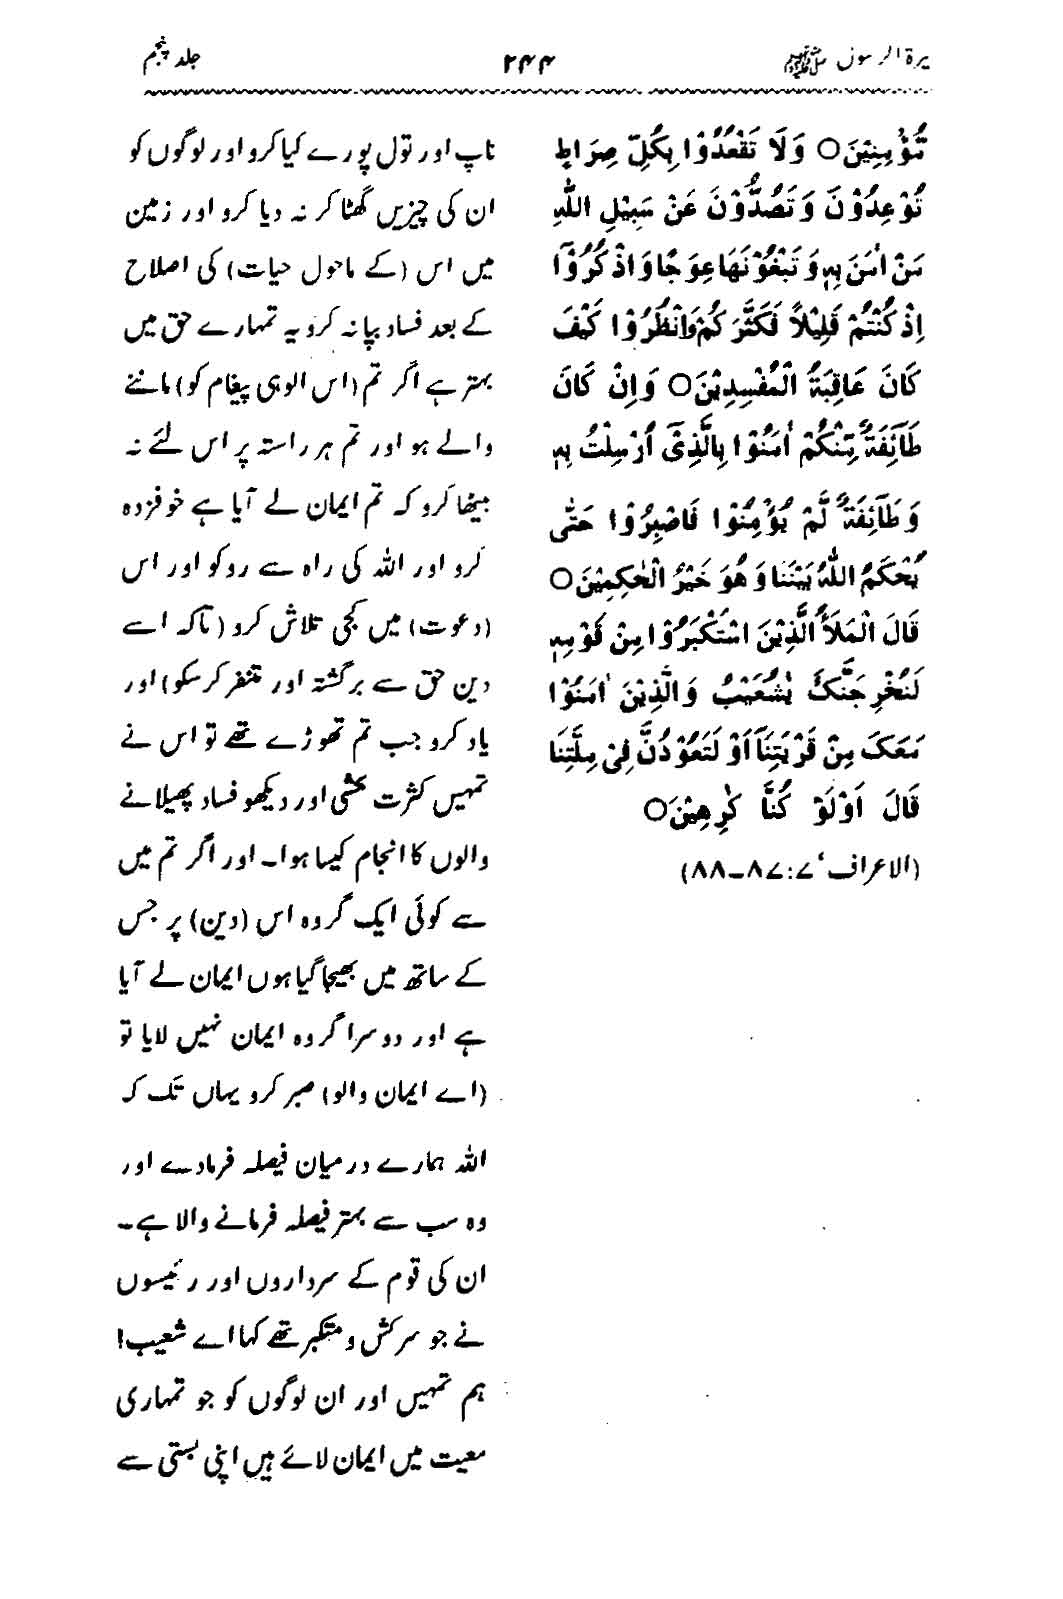 Biography of the Holy Messenger ﷺ [Vol. 5]